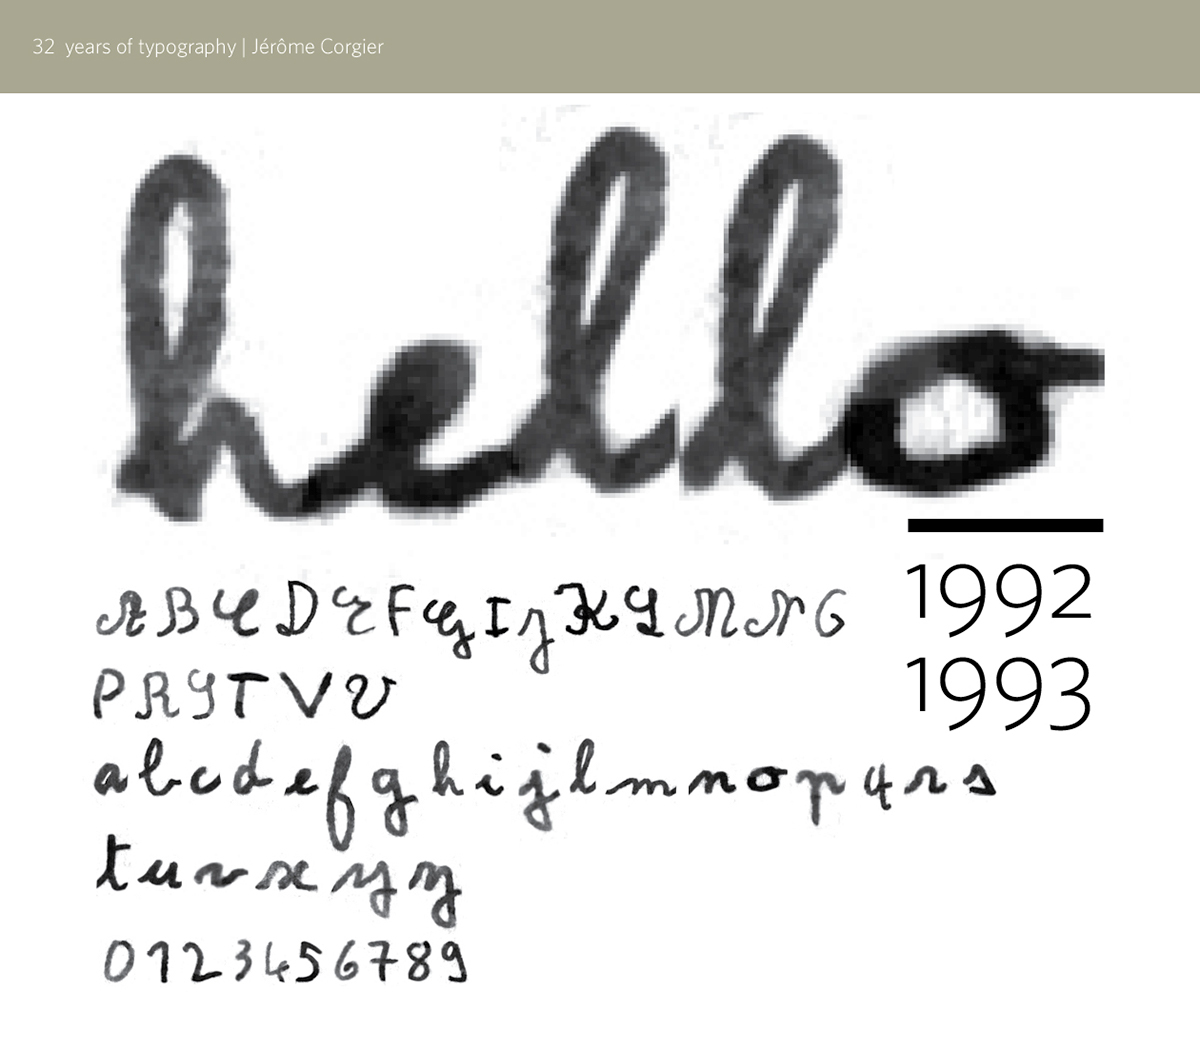 Jerome corgier typographic work Typography of life years old pariri